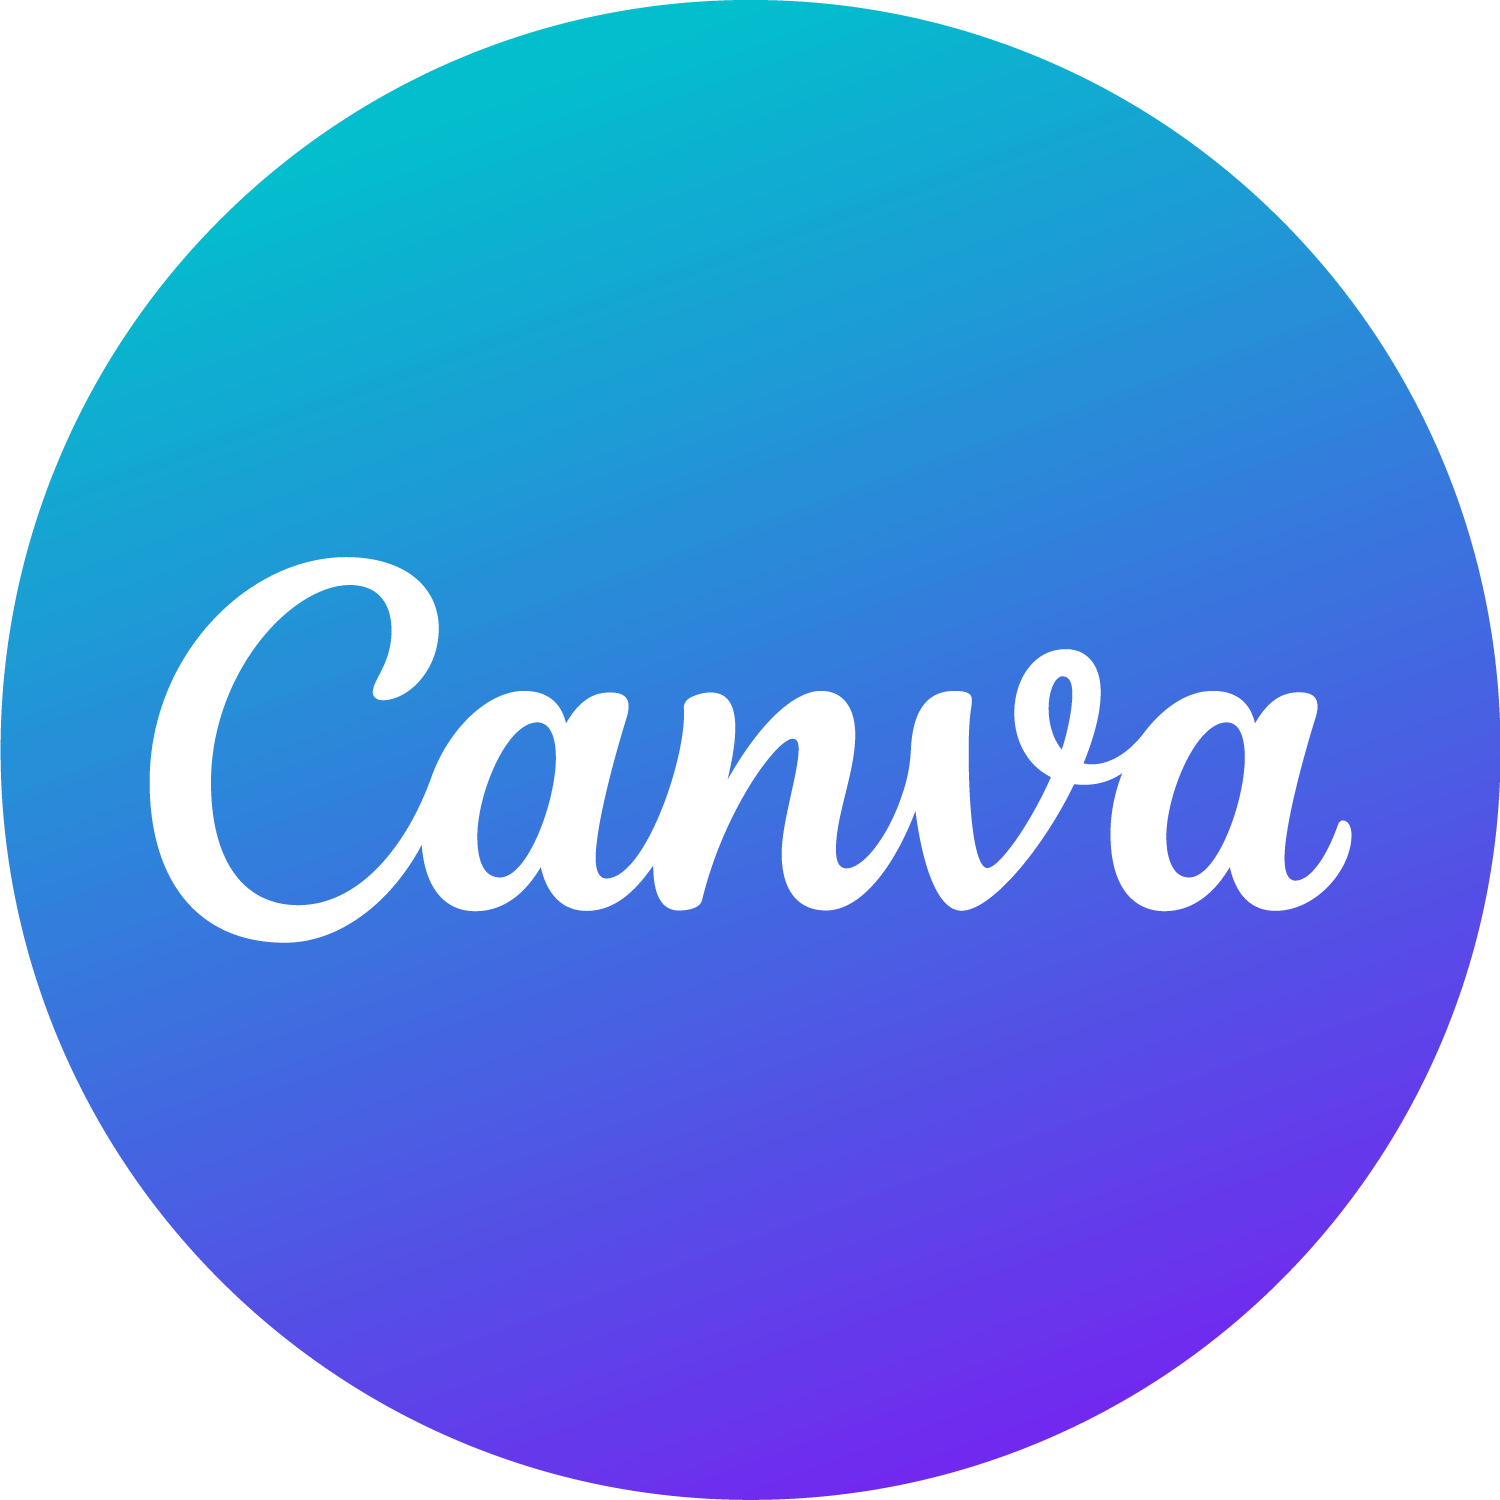 Canva Logo PNG File